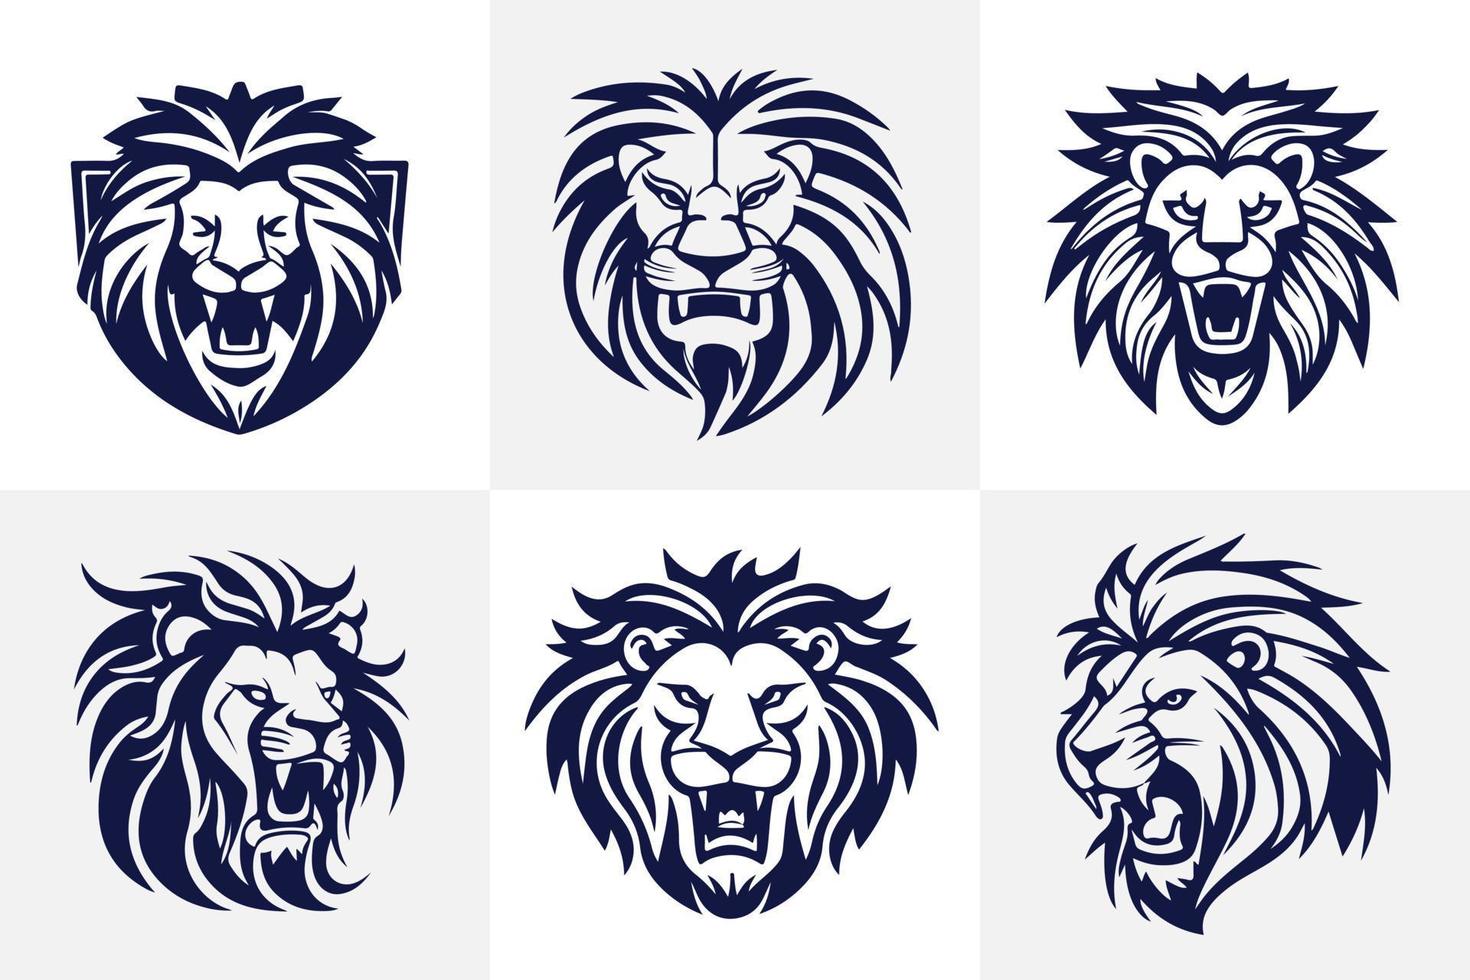 Lion head face logo set silhouette black icon tattoo mascot hand drawn lion king silhouette animal vector illustration